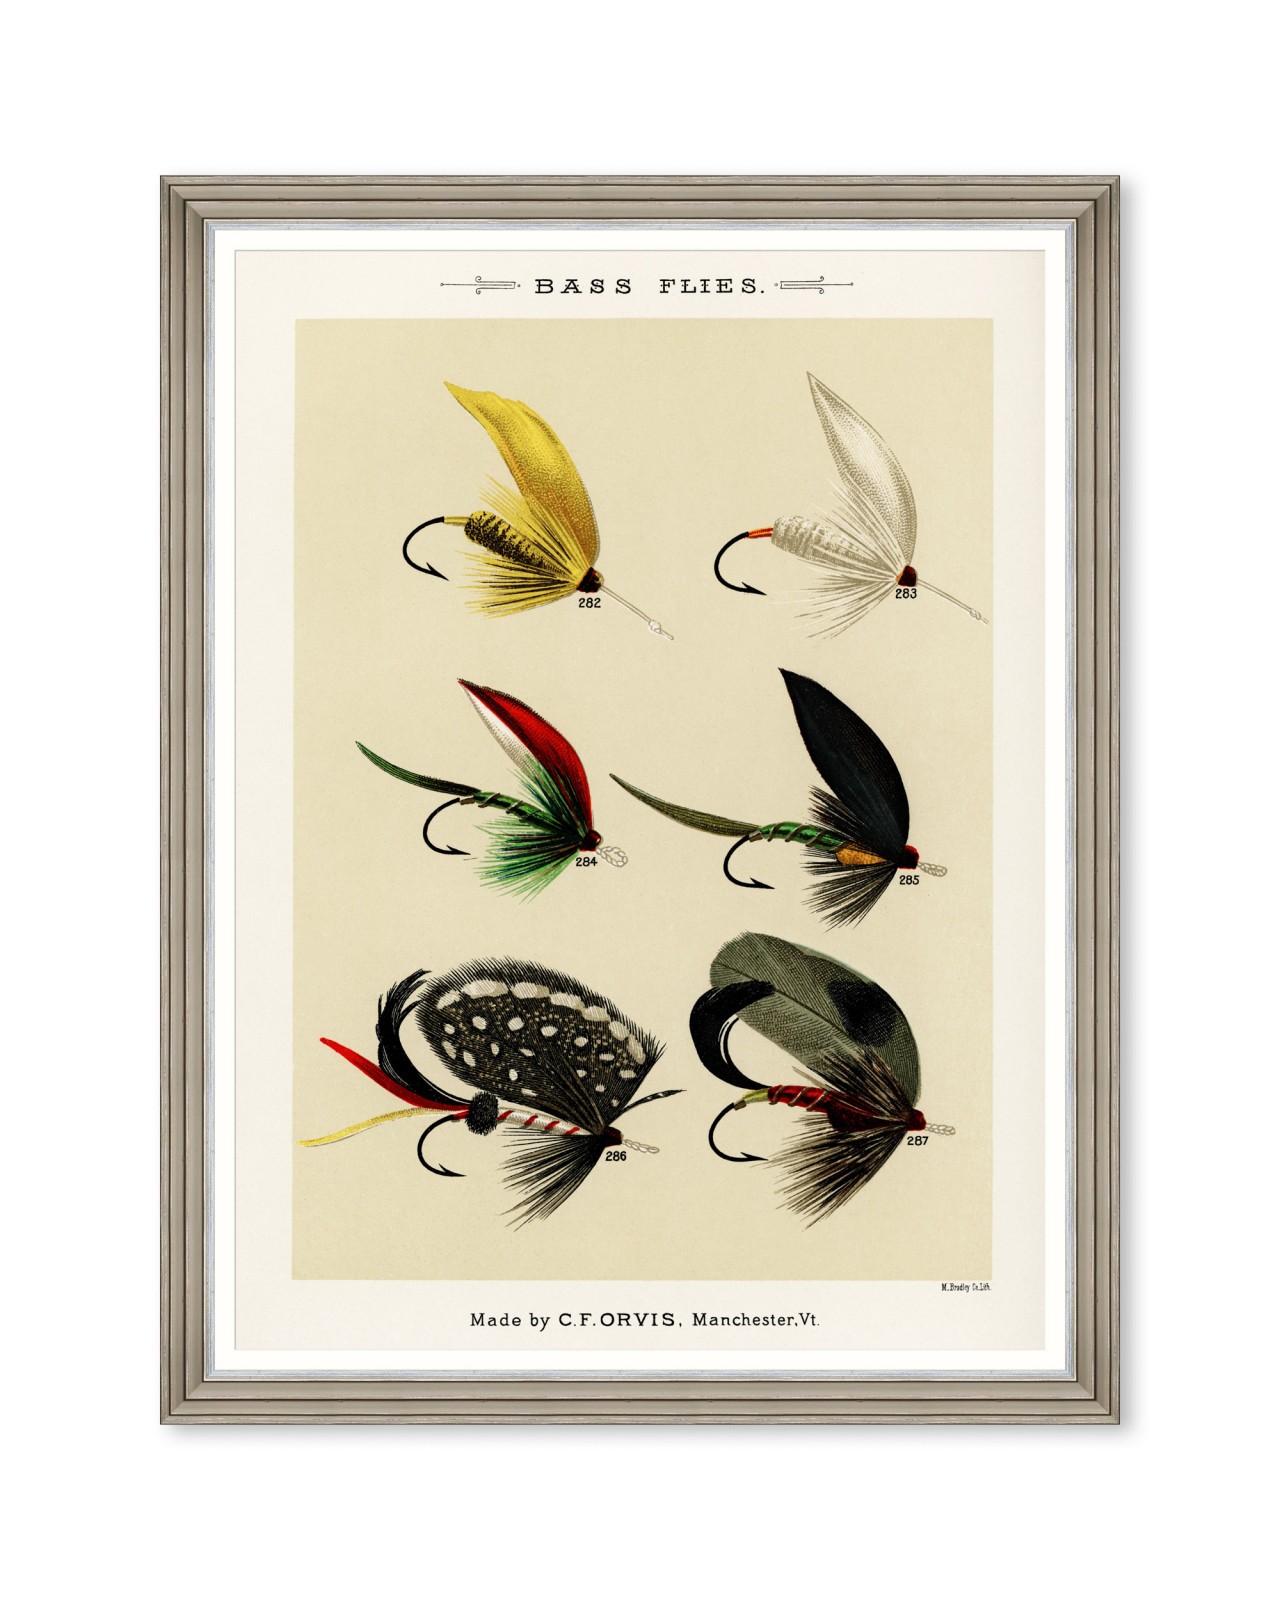 FISHING FLIES I by Mary Orvis Marbury Framed Art